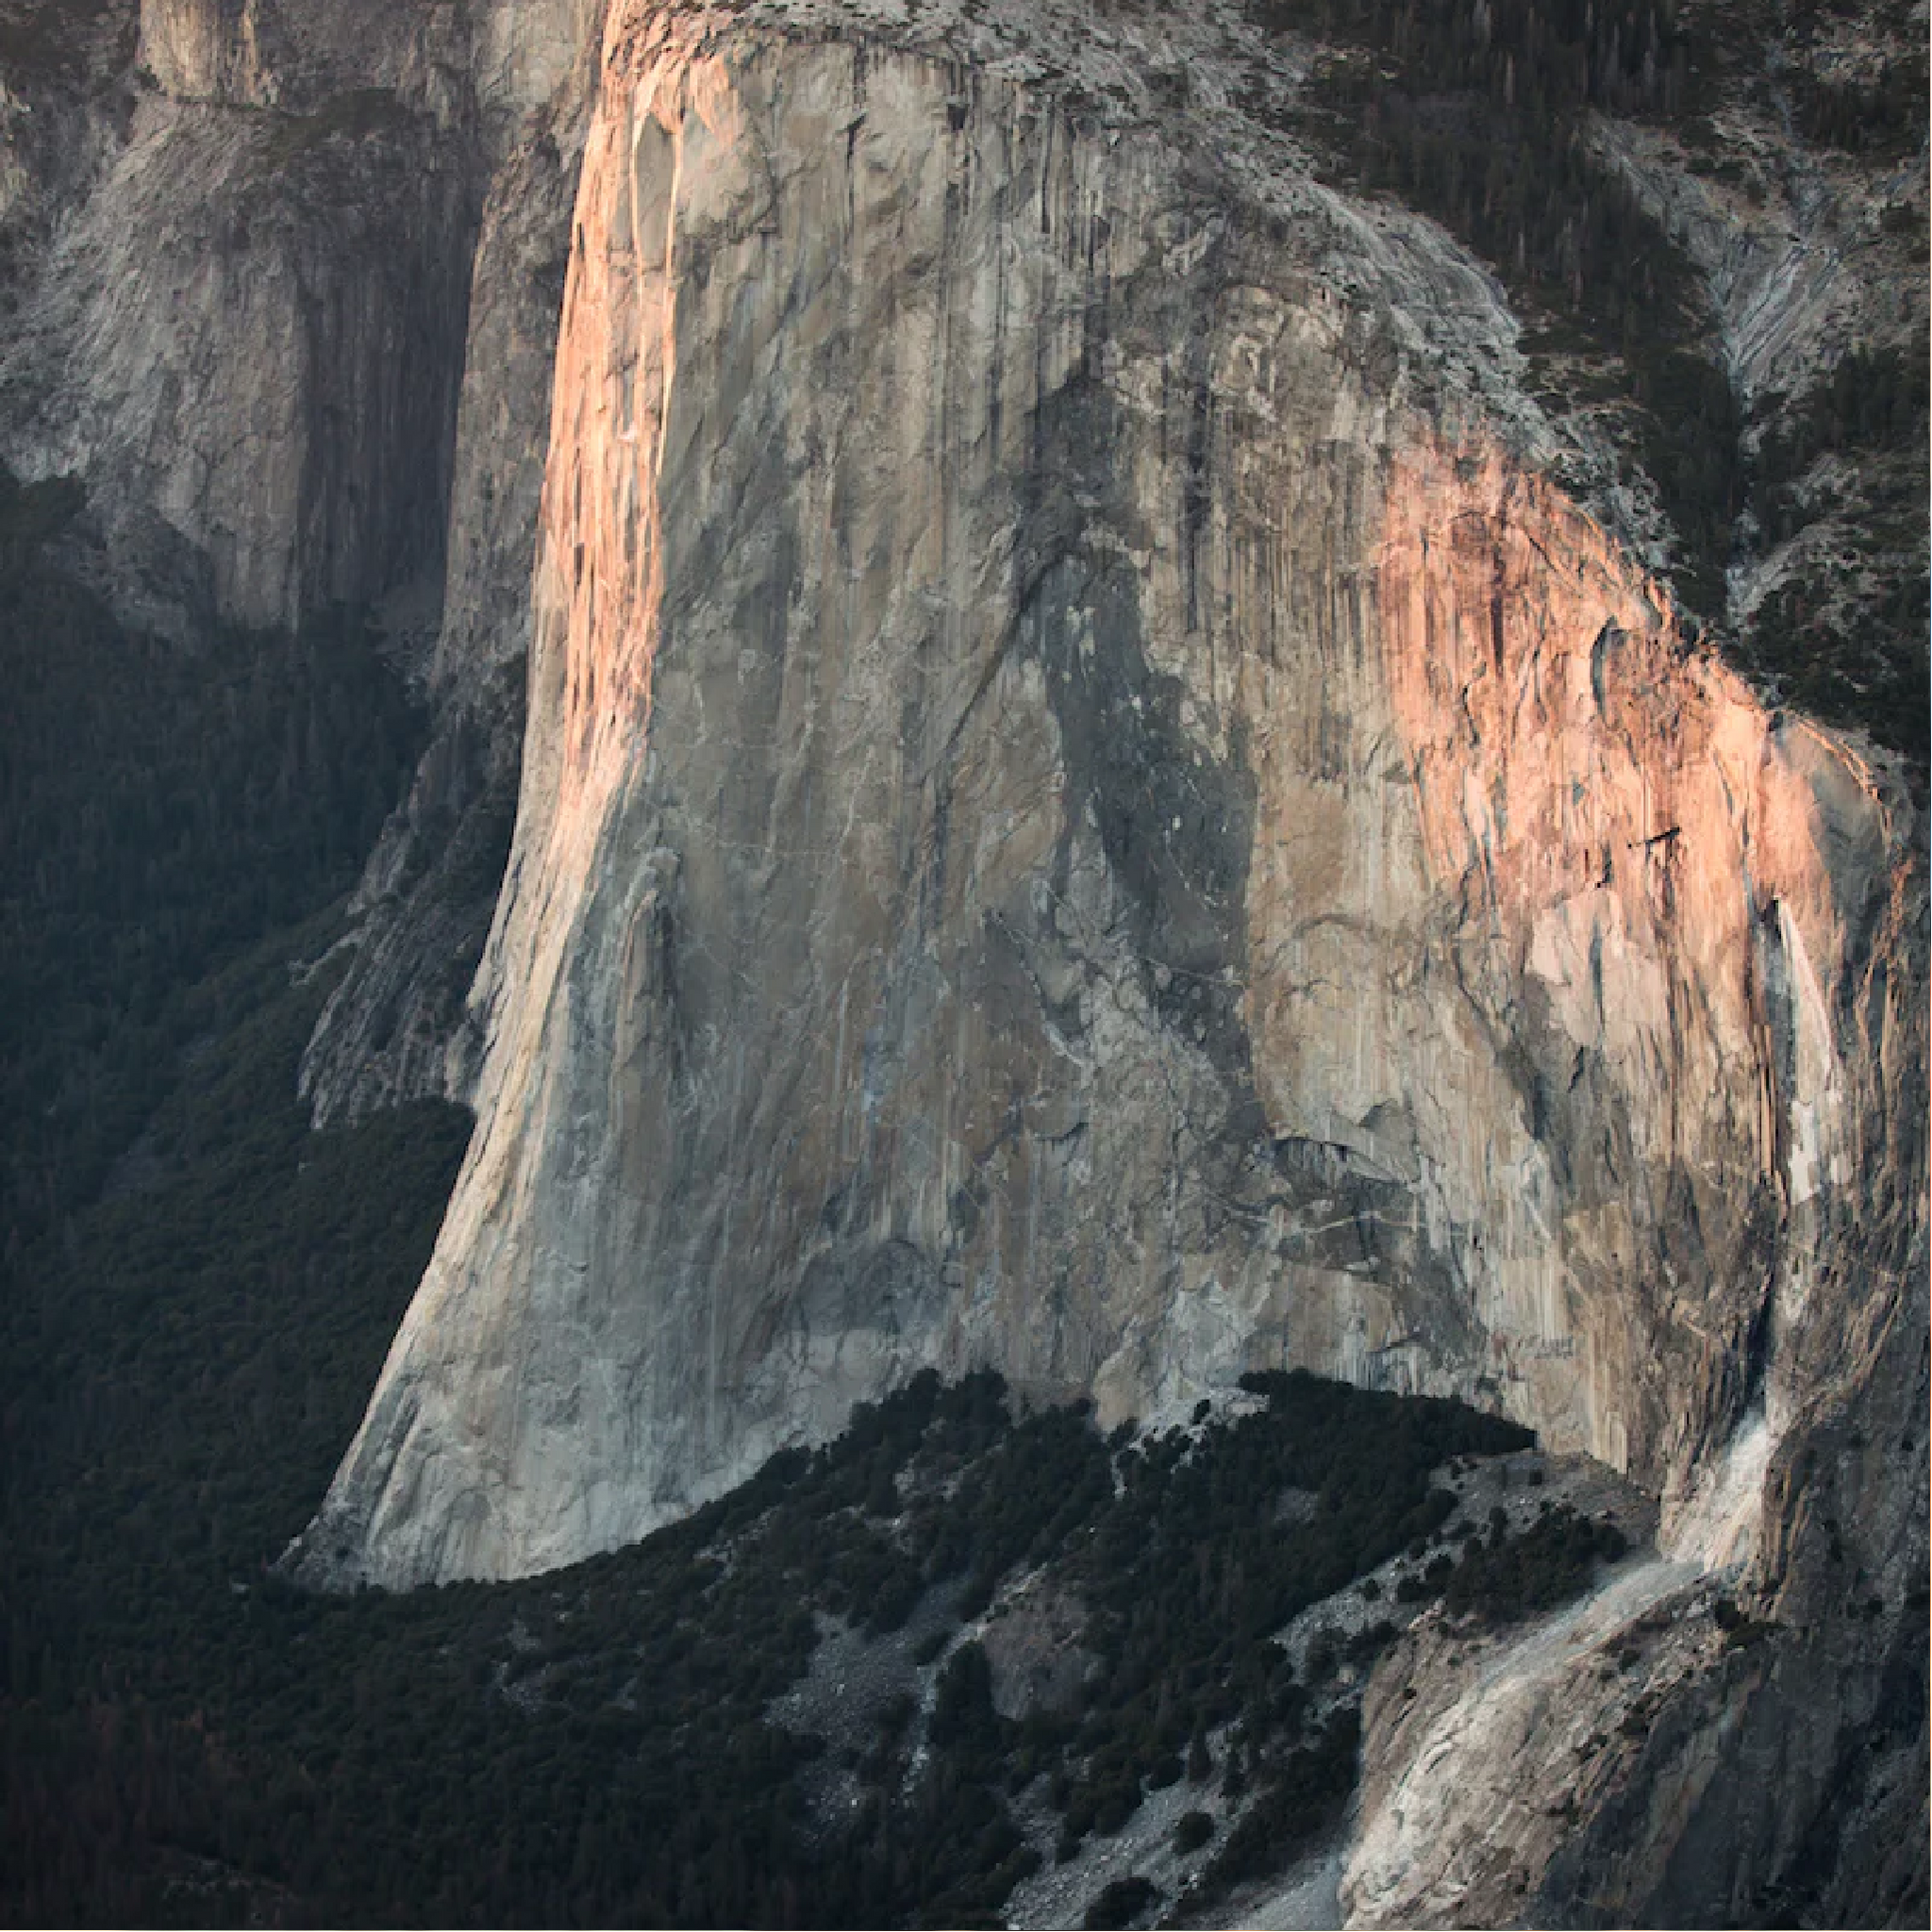 "The Yosemite Way" by Daniel Duane